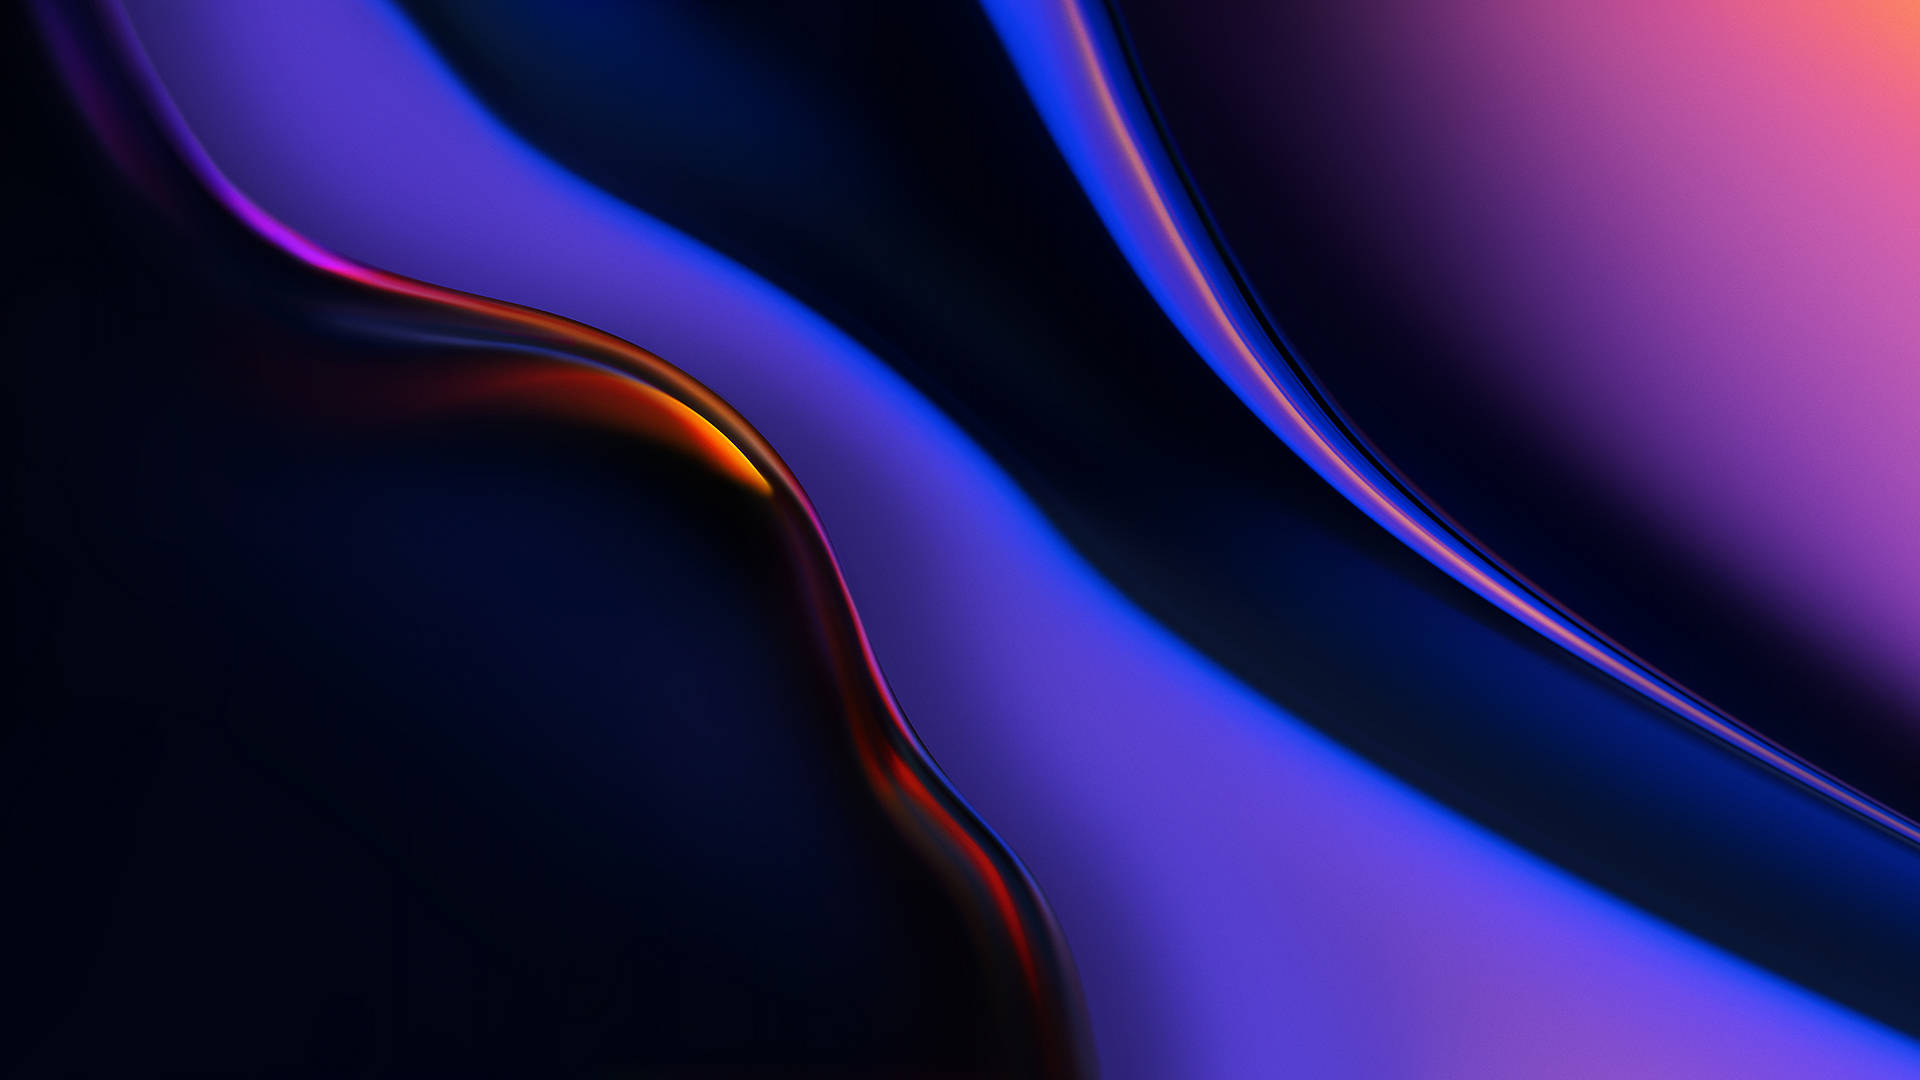 Sleek Oneplus Smartphone on a Blue Violet Background Wallpaper